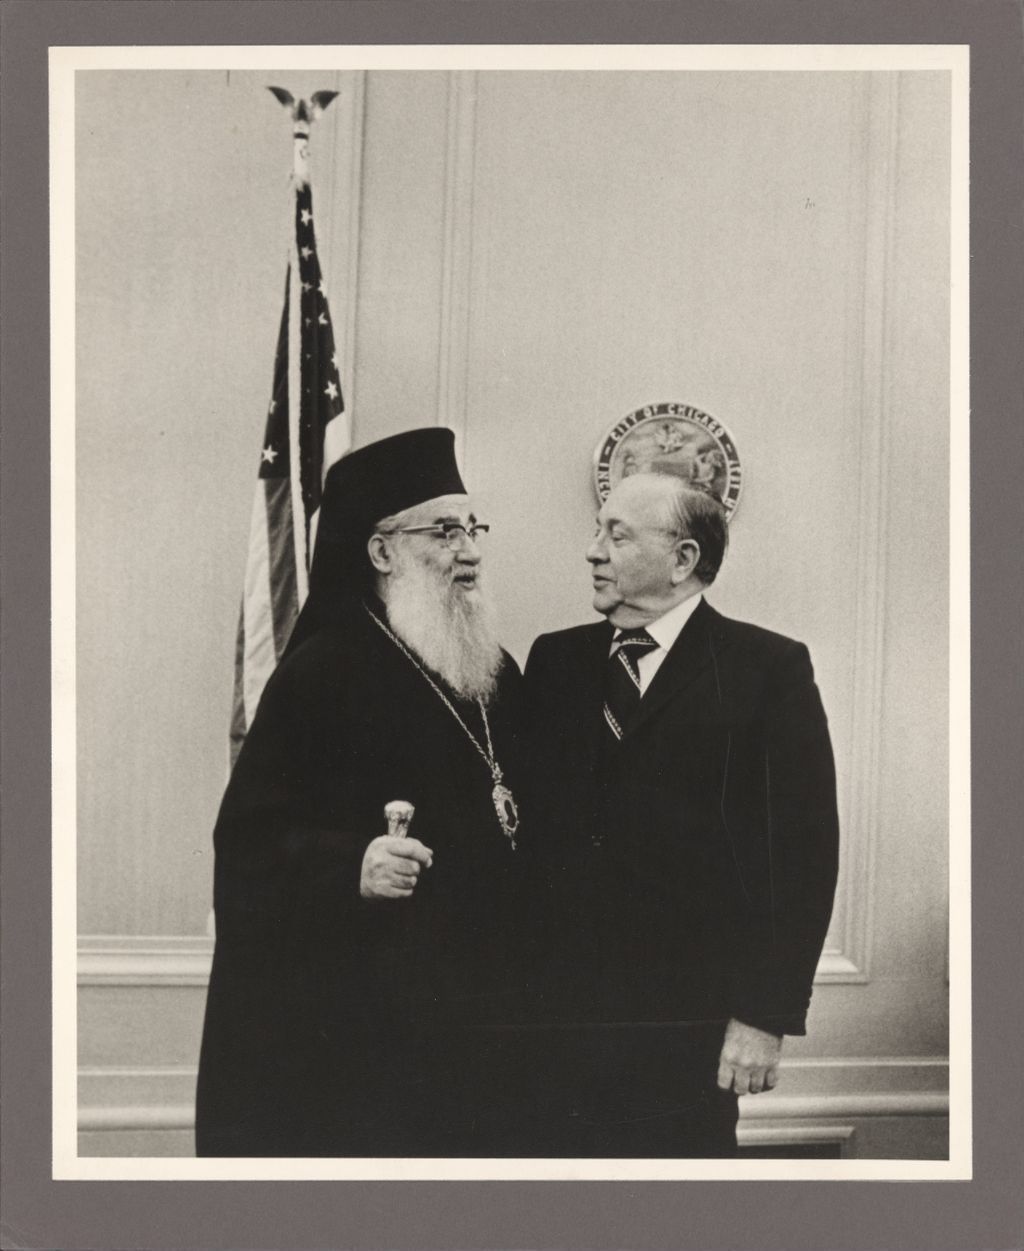 Richard J. Daley with an Orthodox priest